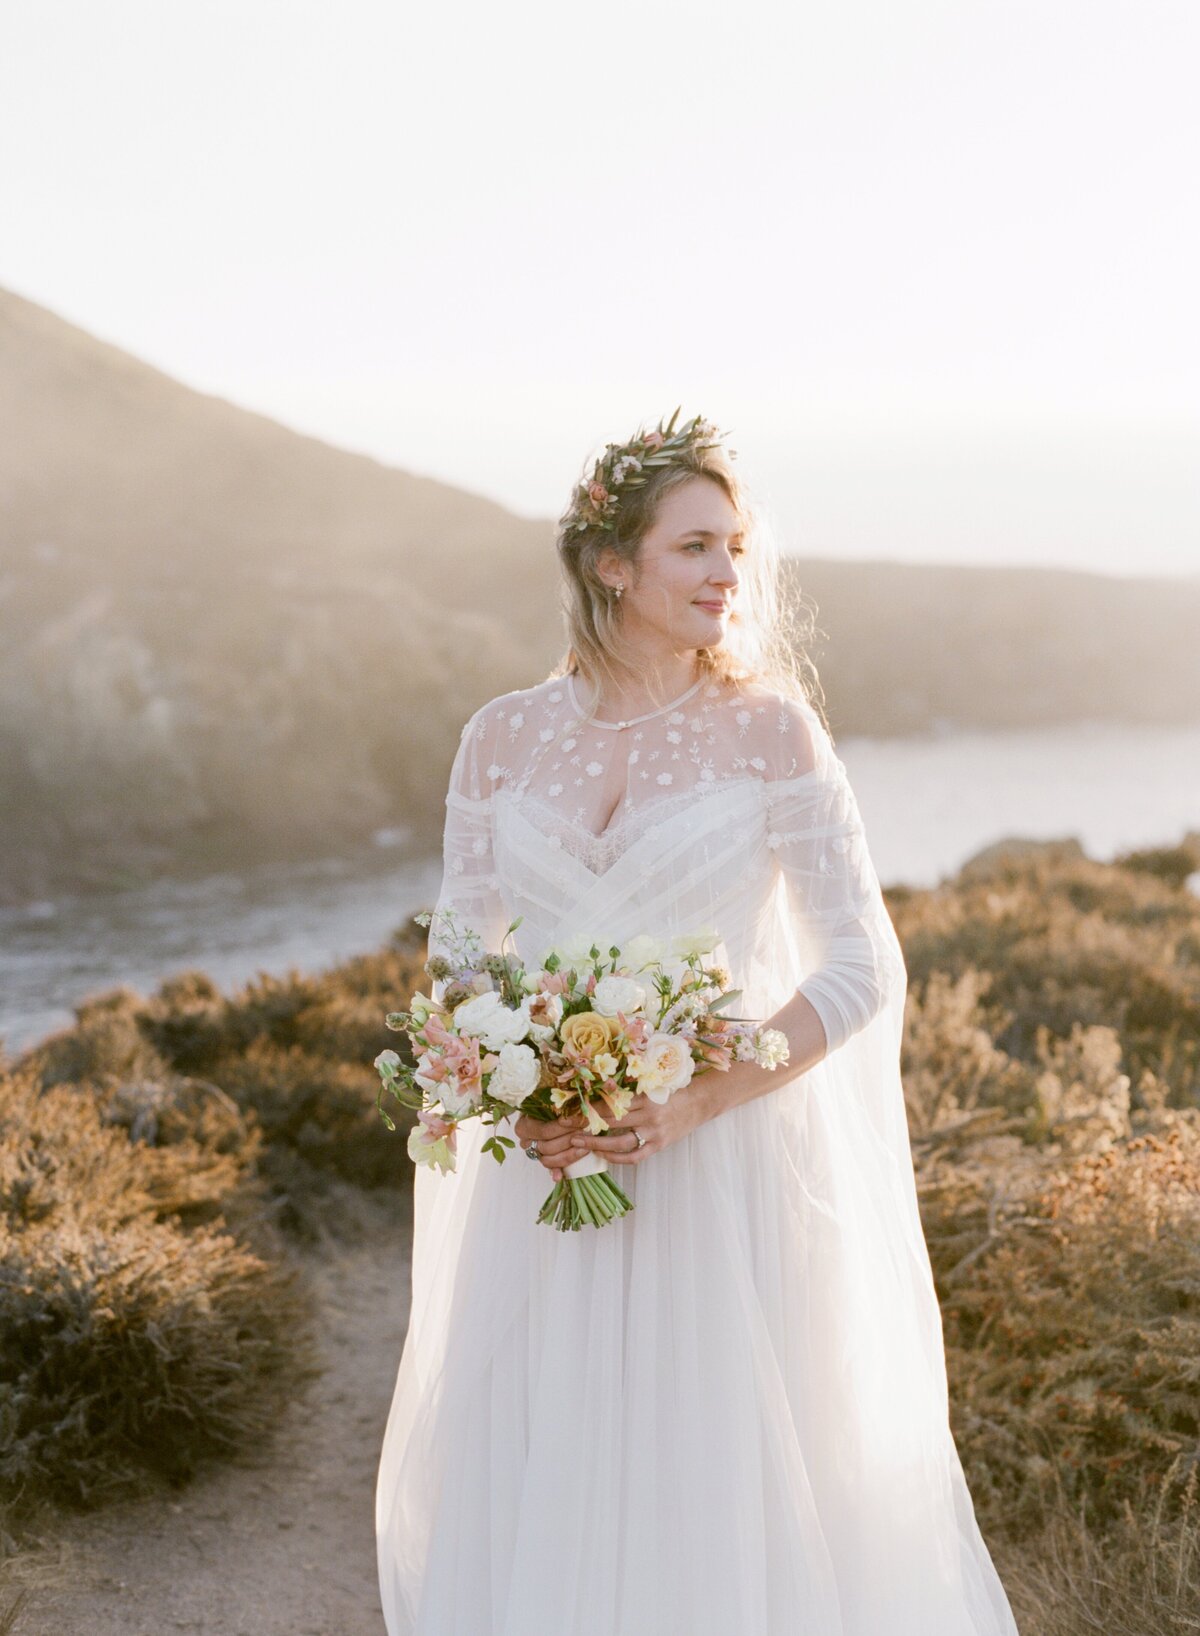 Tiffany + Ian California Big Sur Highway One Wedding Portraits Cassie Valente Photography 0119